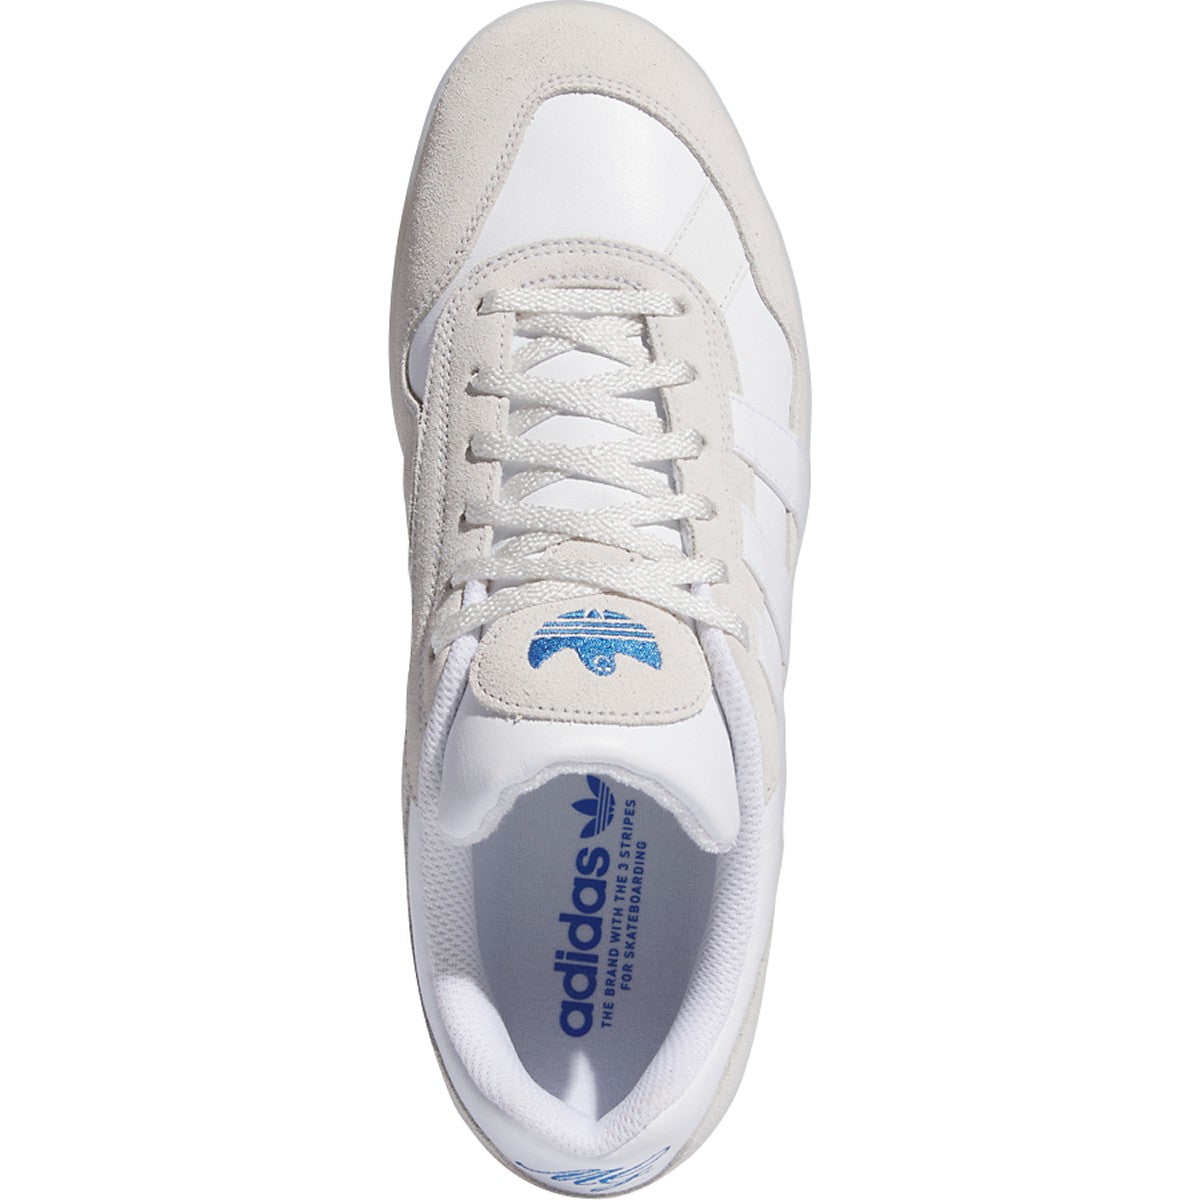 Crystal White Aloha Super Adidas Skate Shoe Top